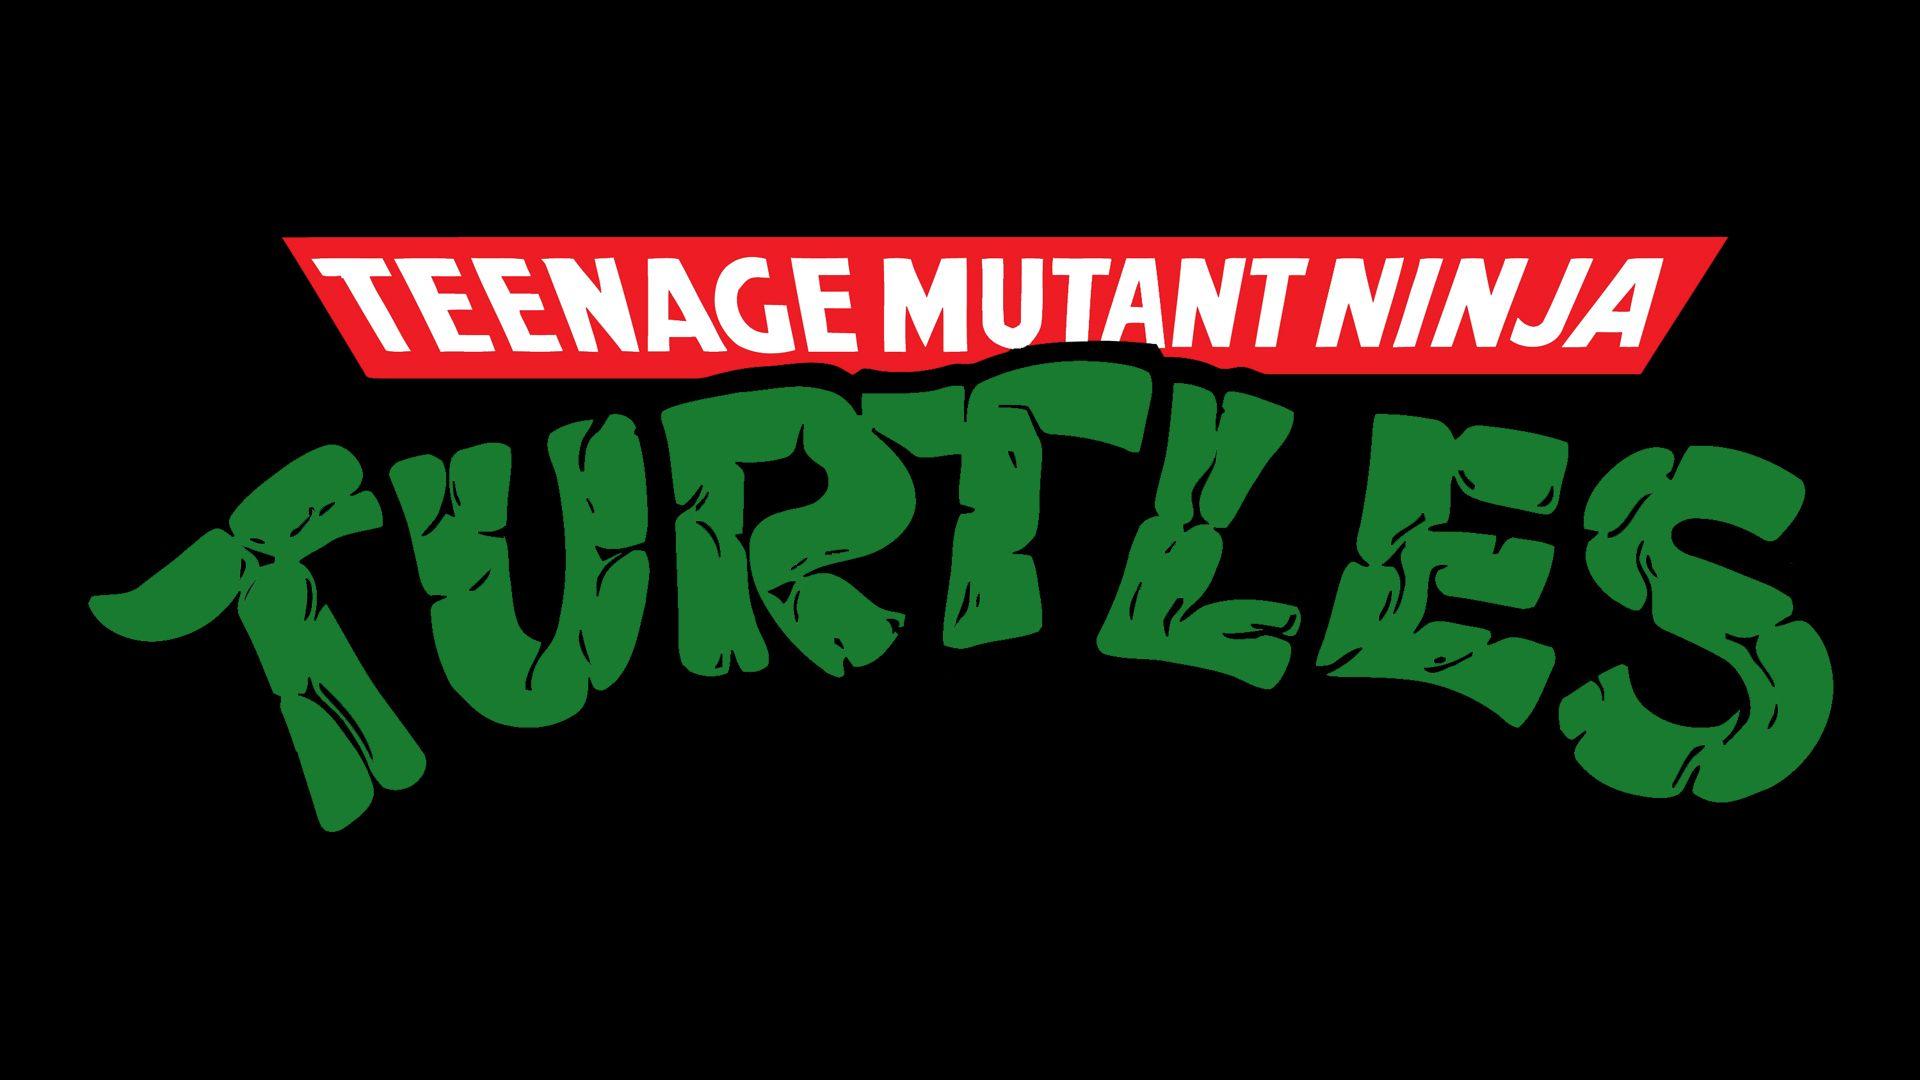 Download Teenage Mutant Ninja Turtles Logo Wallpaper 40699 1920x1080